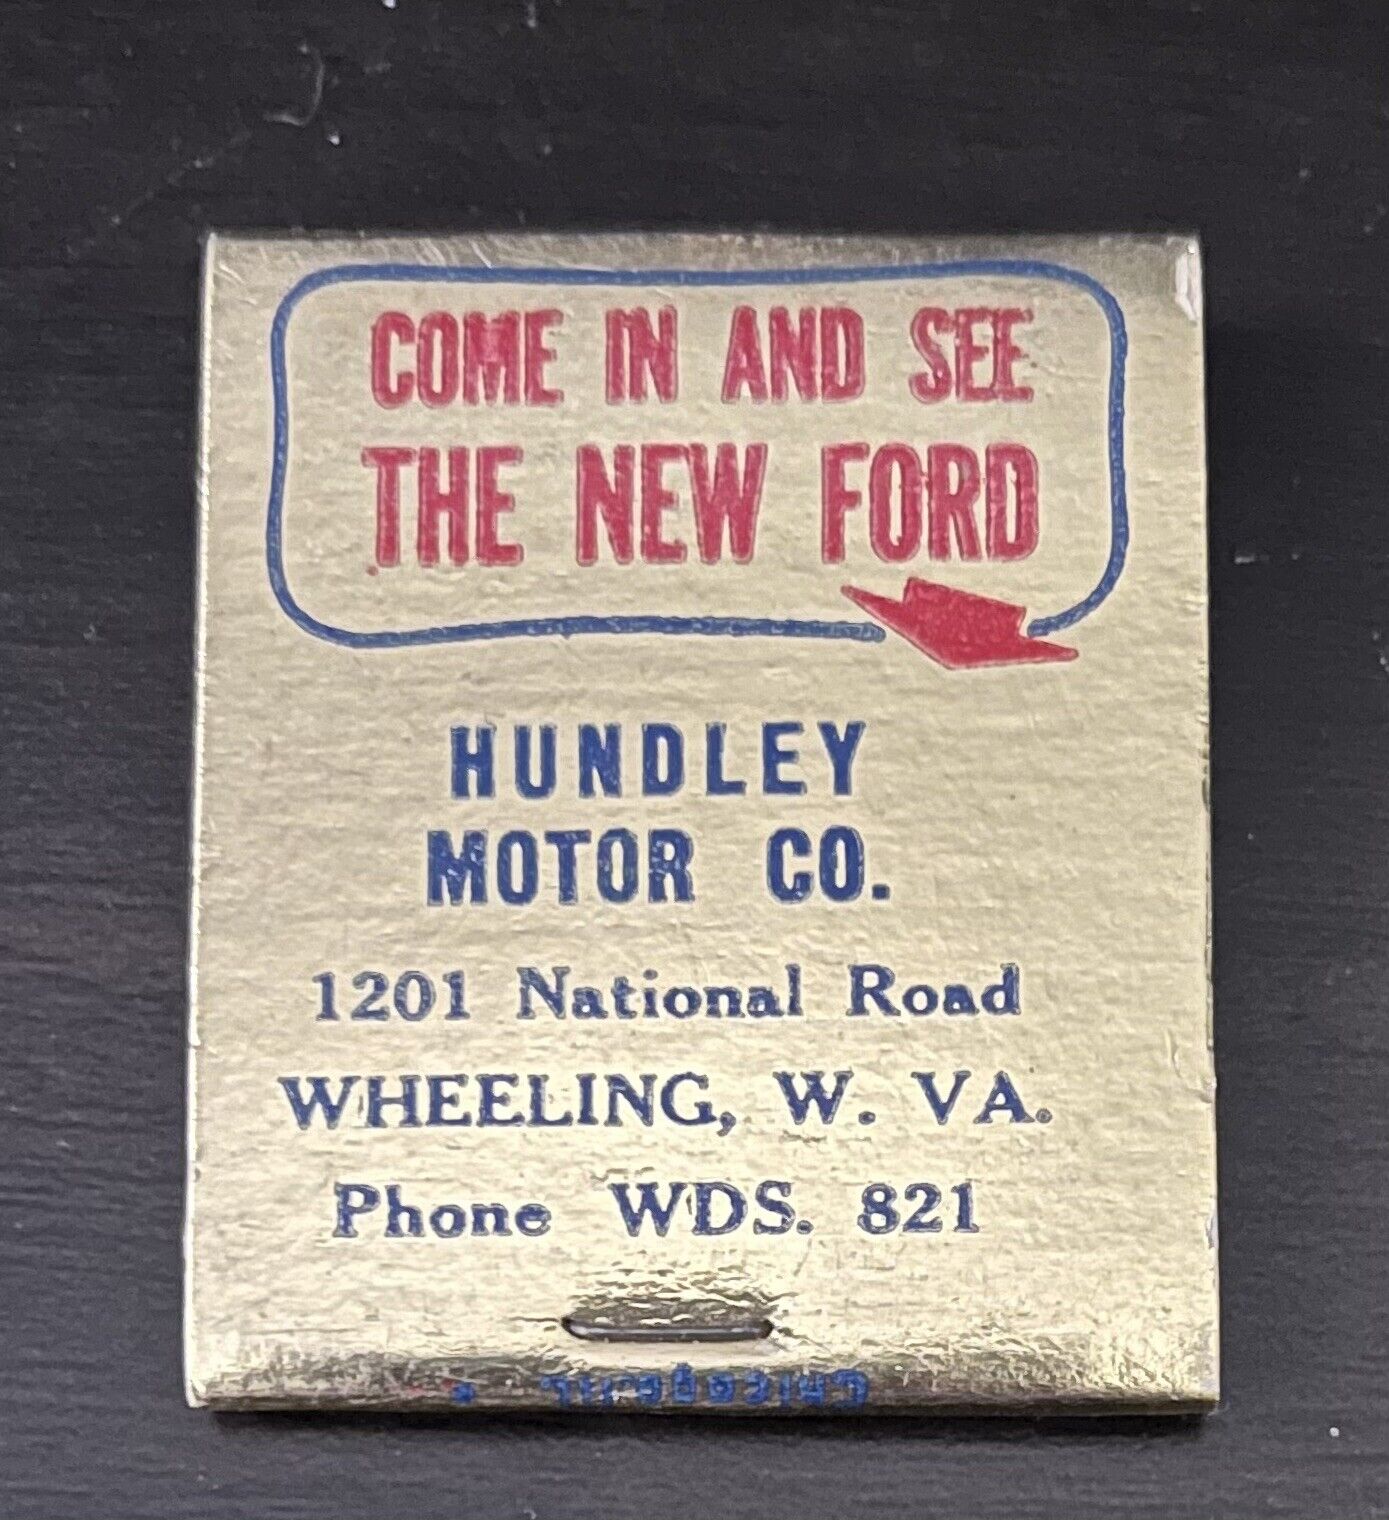 Wheeling WV Hundley Motor Co. 1949 Ford Matchbook